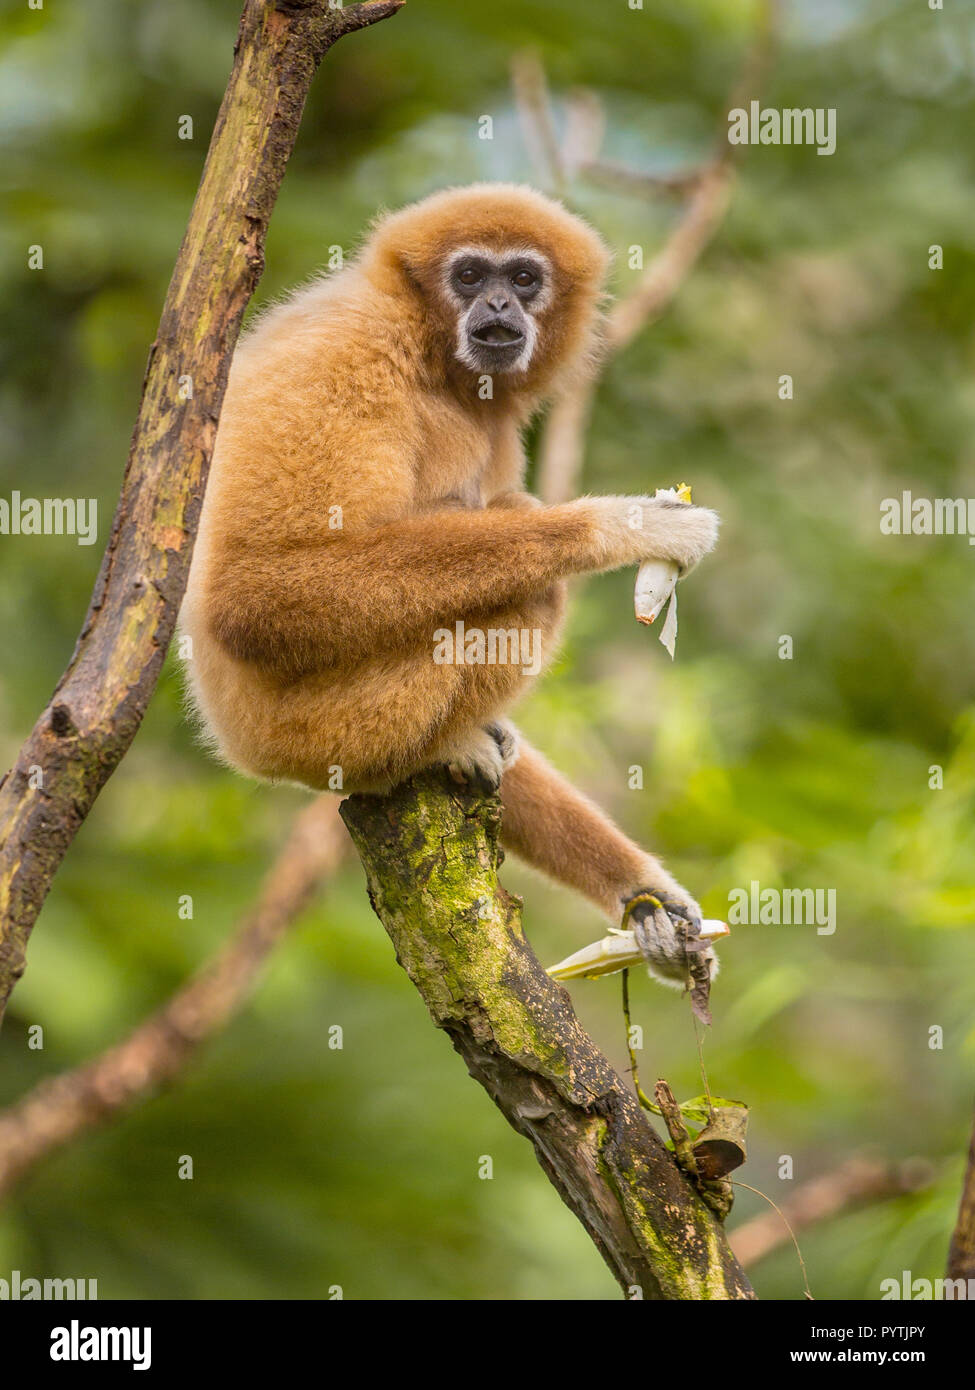 Lar gibbon (Hylobates lar), also known as the white-handed gibbon eating banana on branch in rainforest jungle Stock Photo